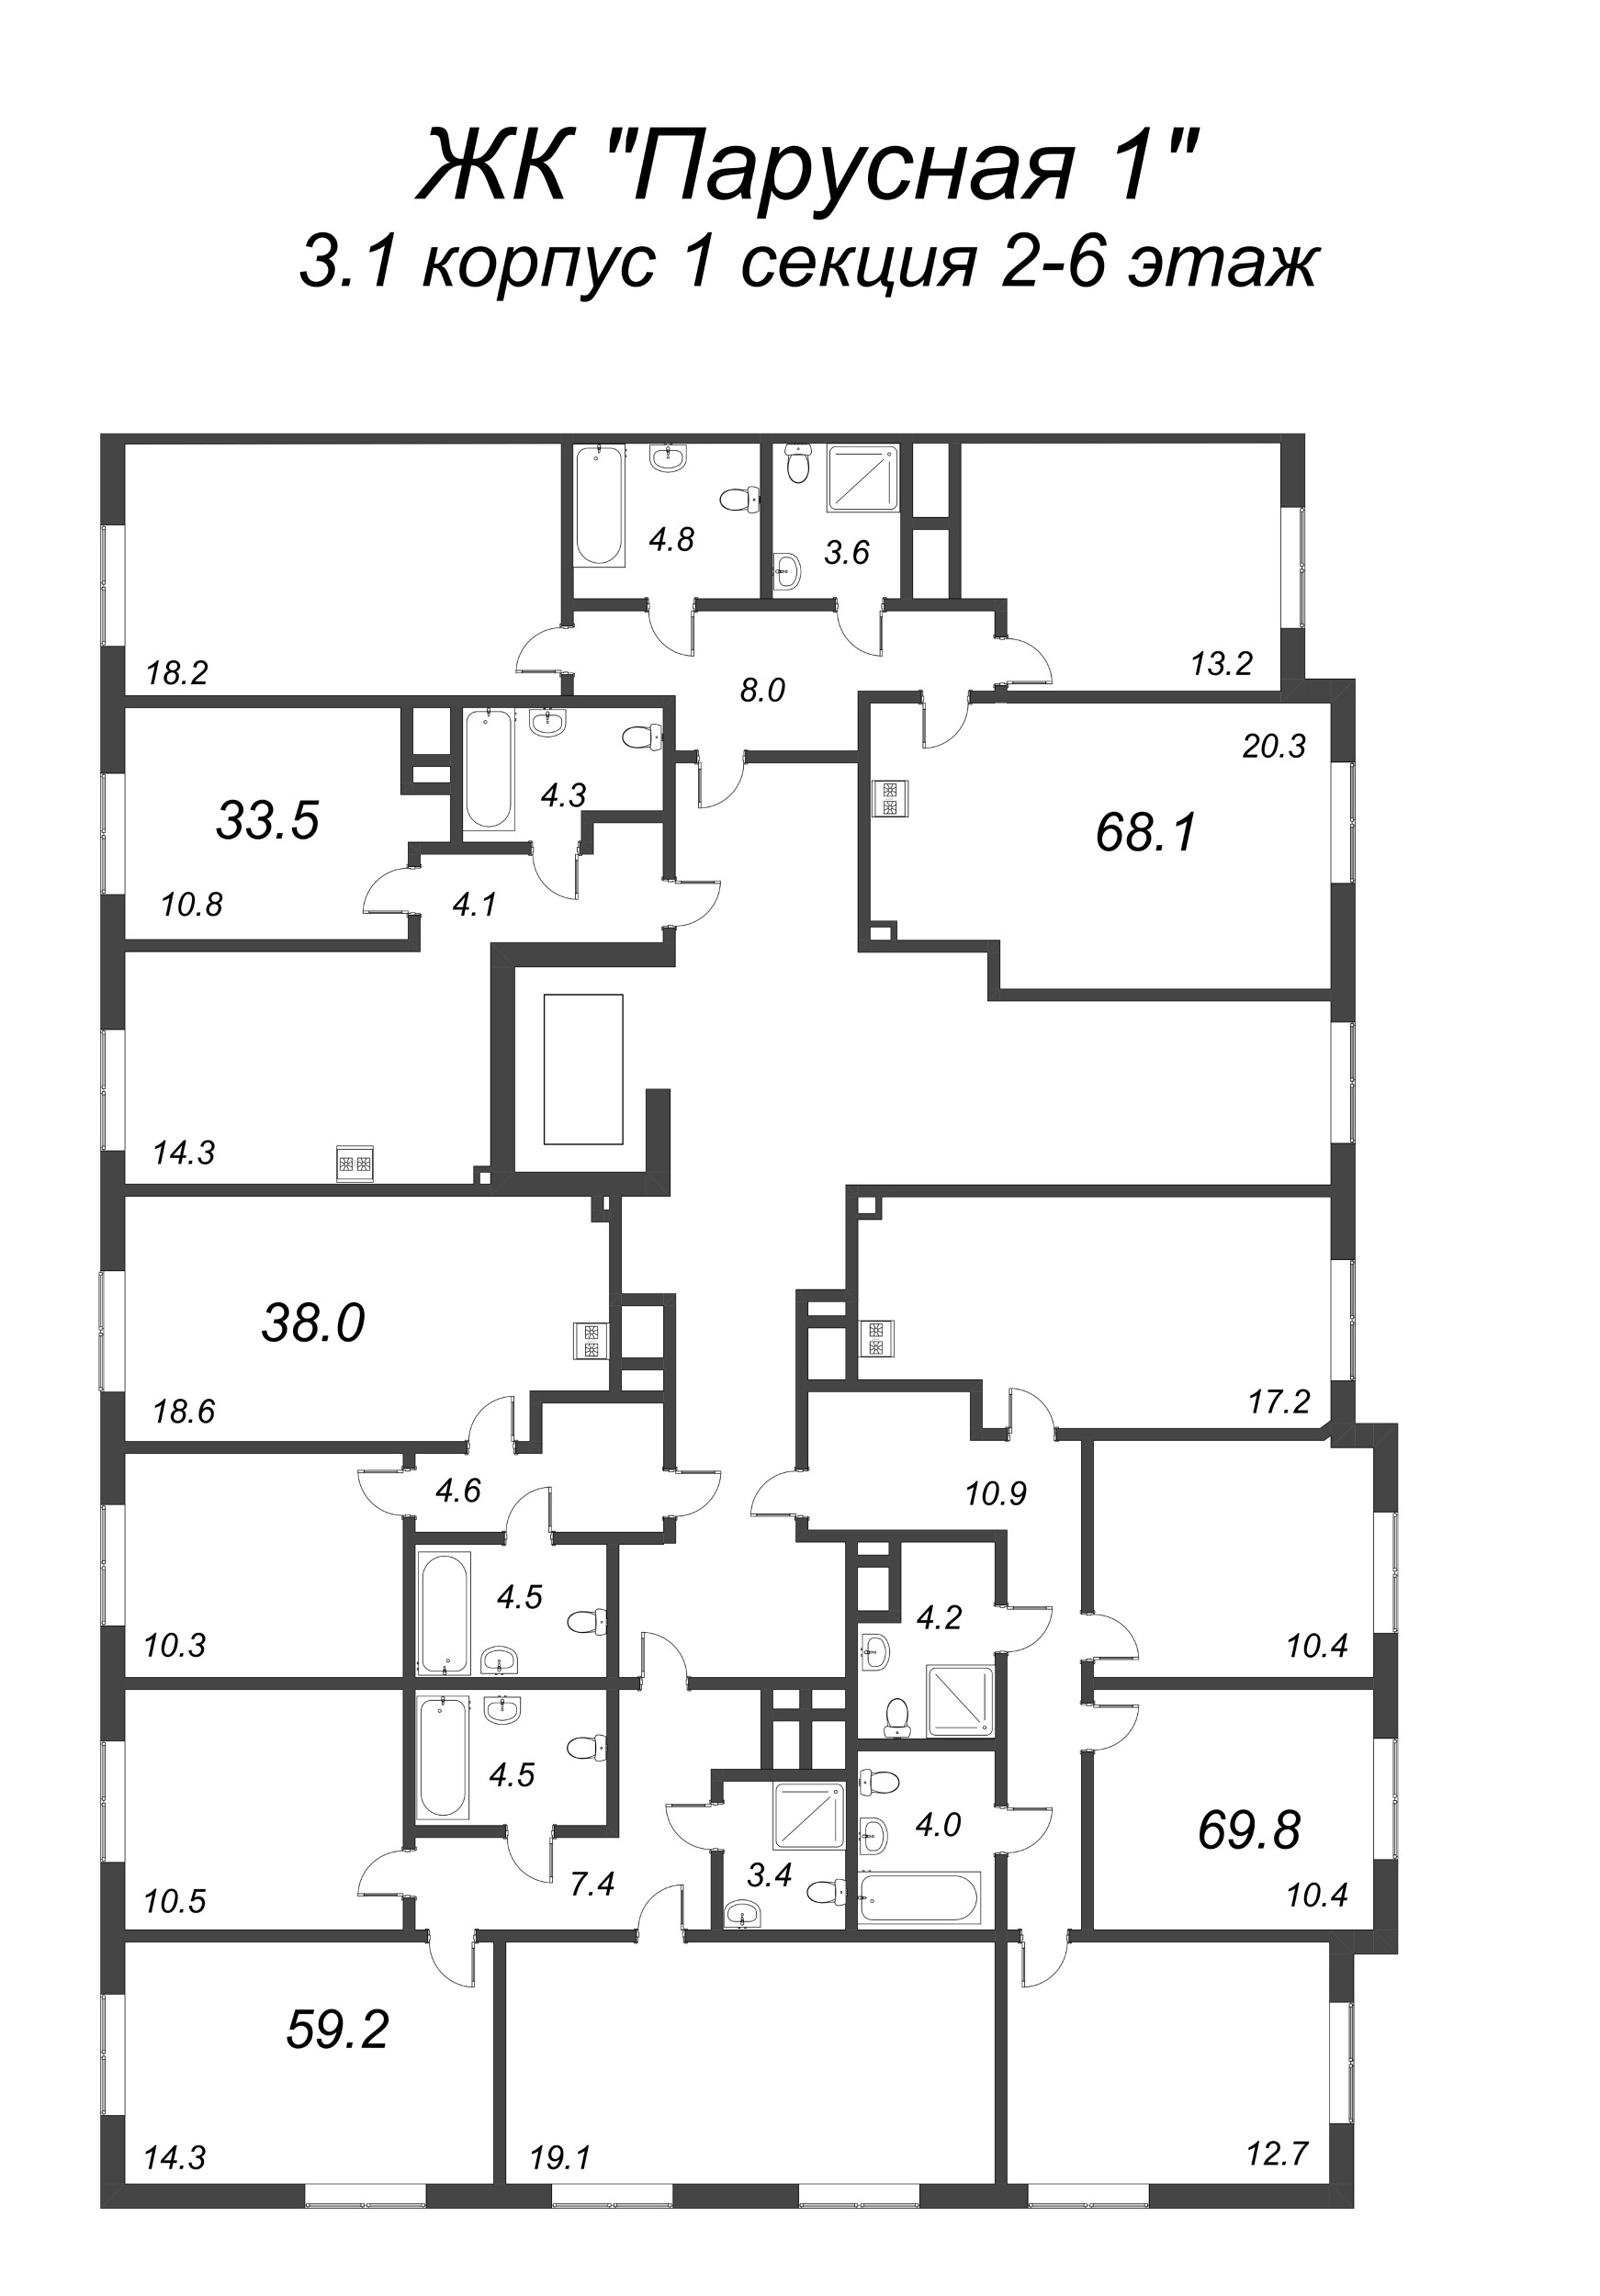 4-комнатная (Евро) квартира, 69.8 м² - планировка этажа